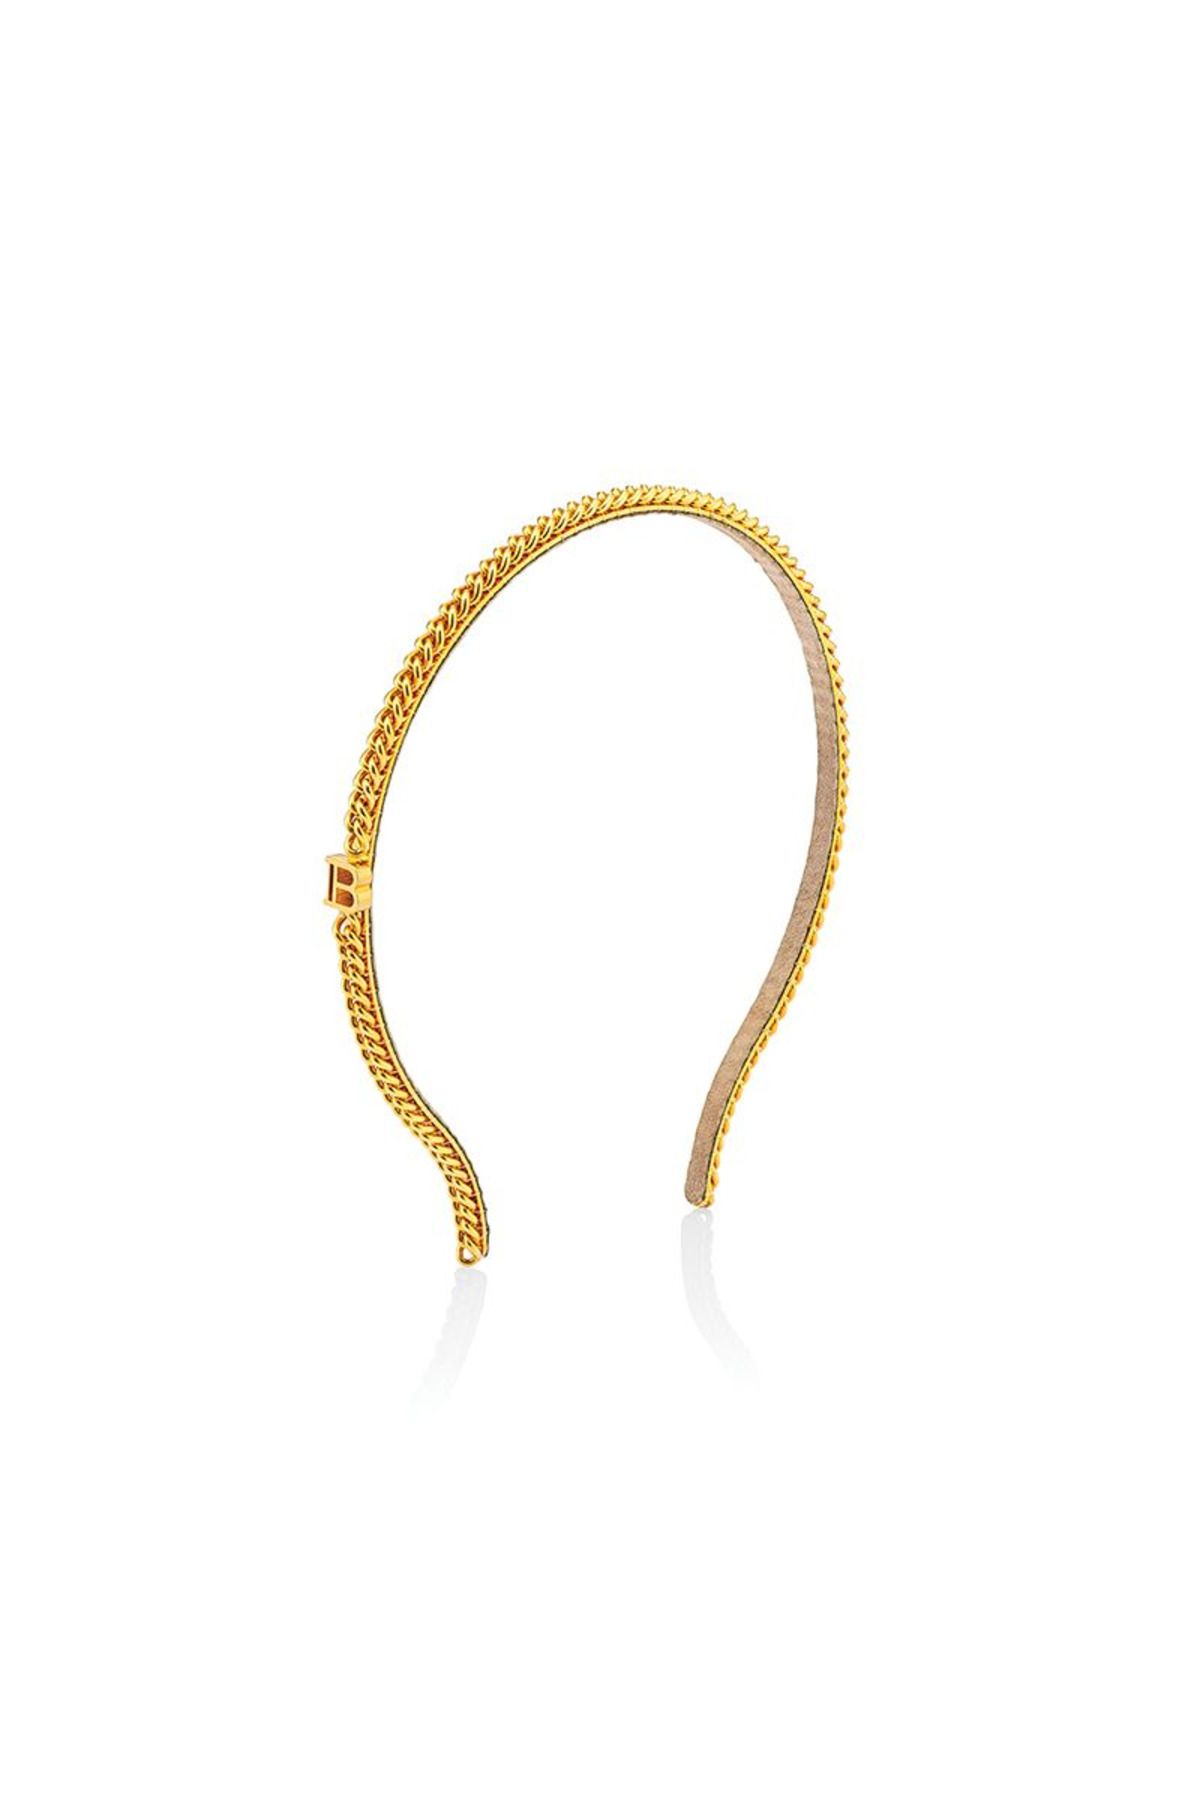 BALMAIN Pont Des Arts Headband Small Gold Chain